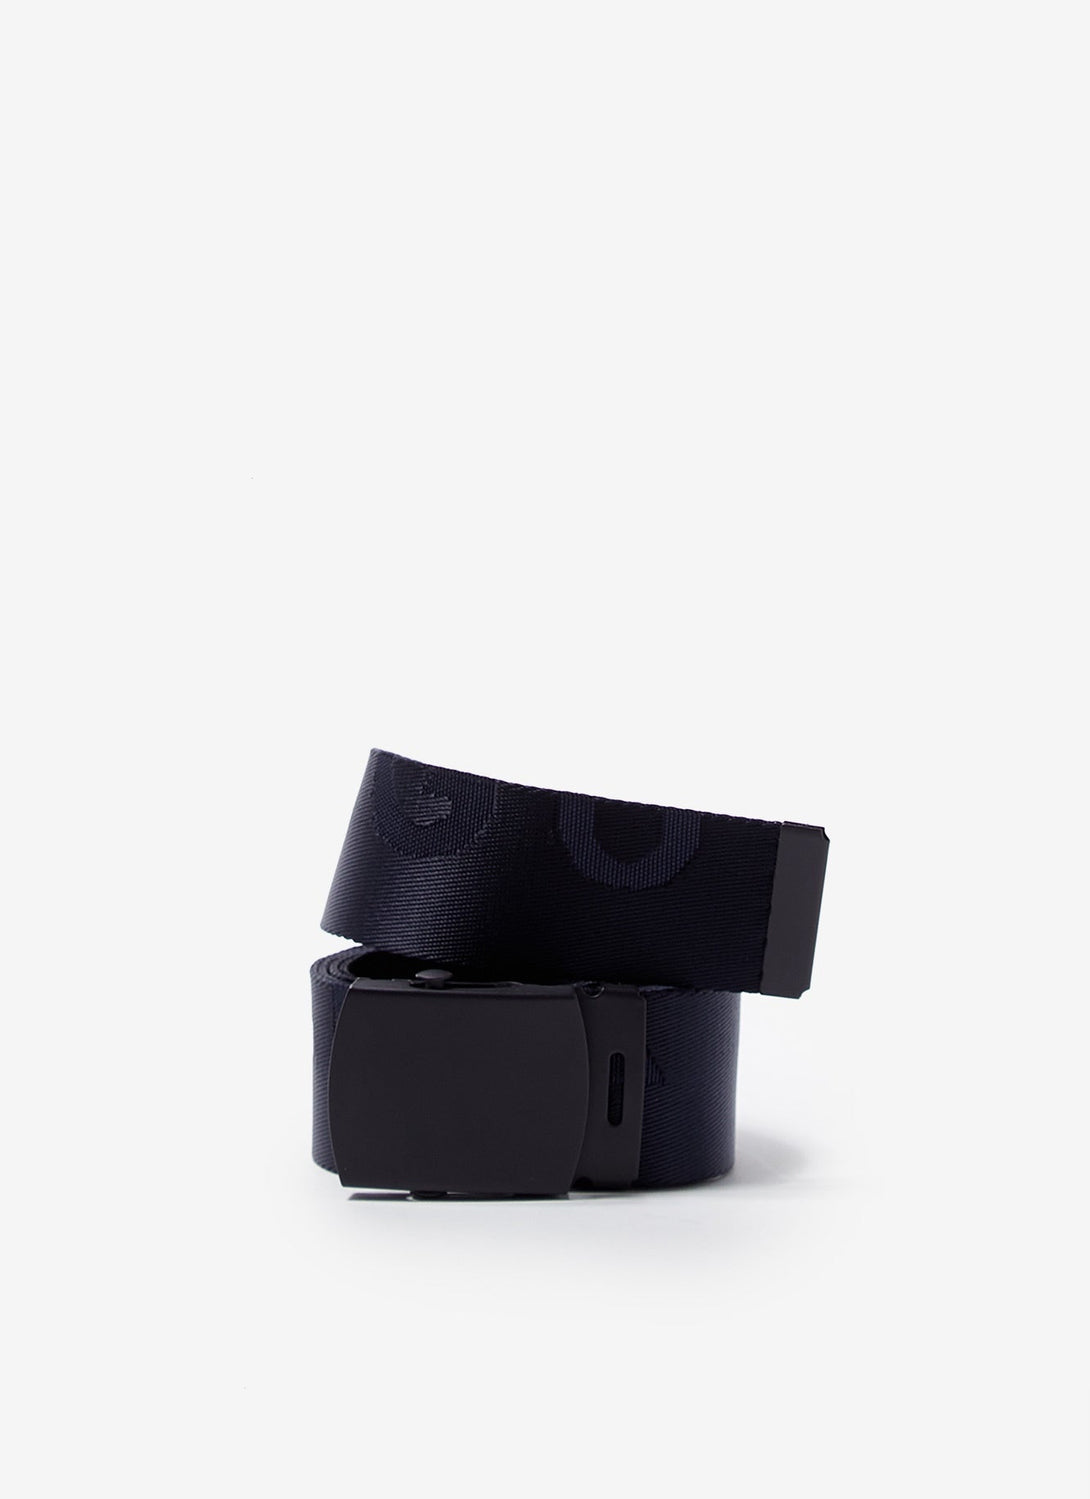 Men Belt | Navy Blue New Belt by Spanish designer Adolfo Dominguez